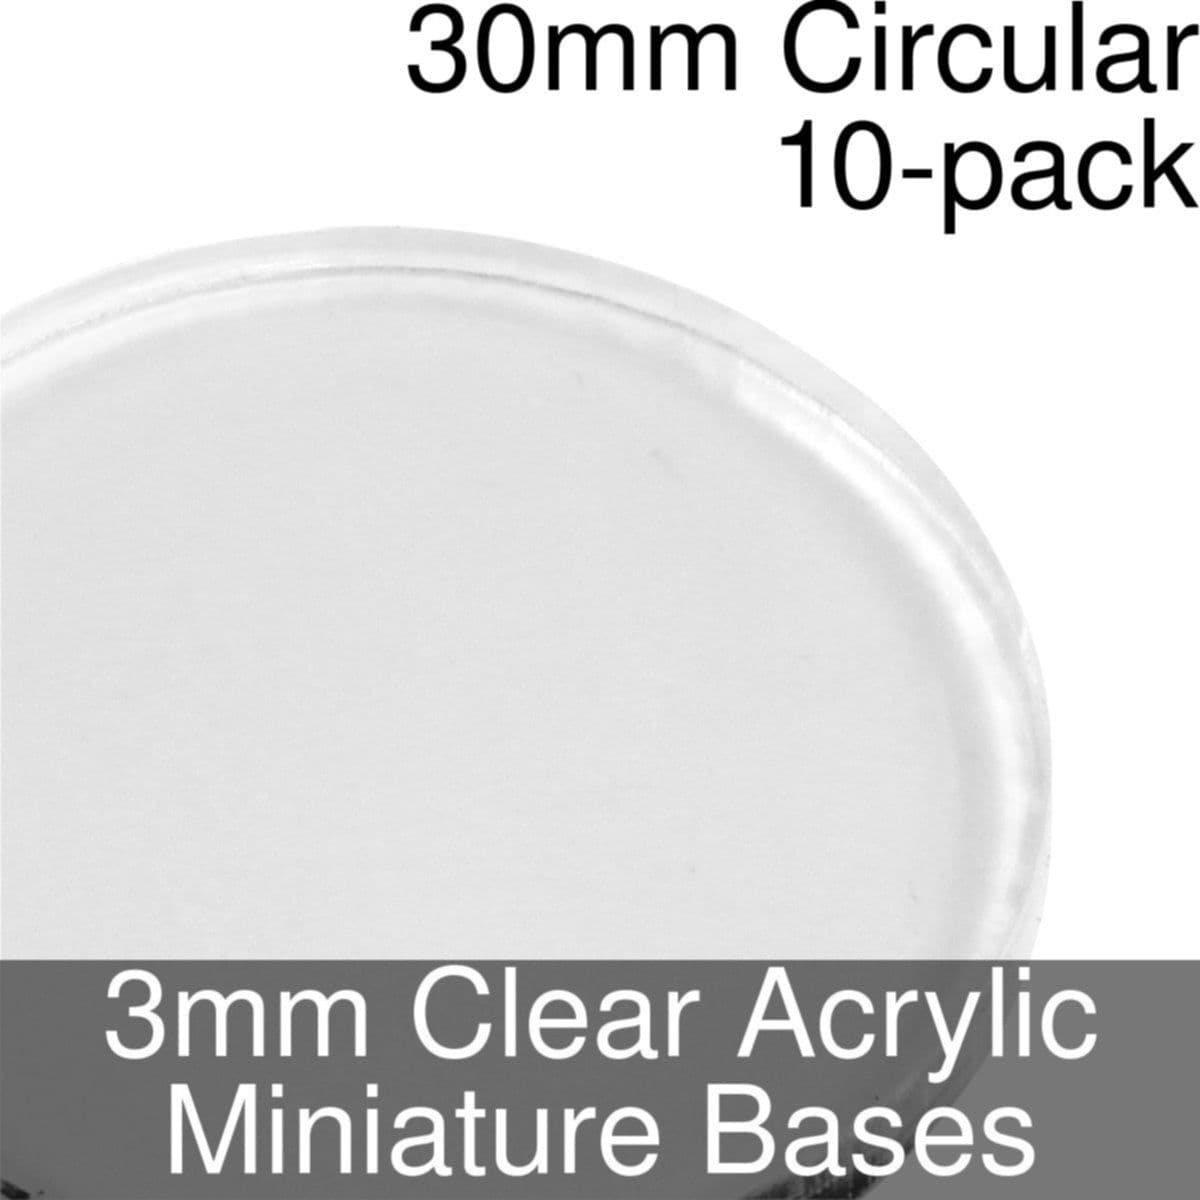 Miniature Bases, Circular, 30mm, 3mm Clear (10)